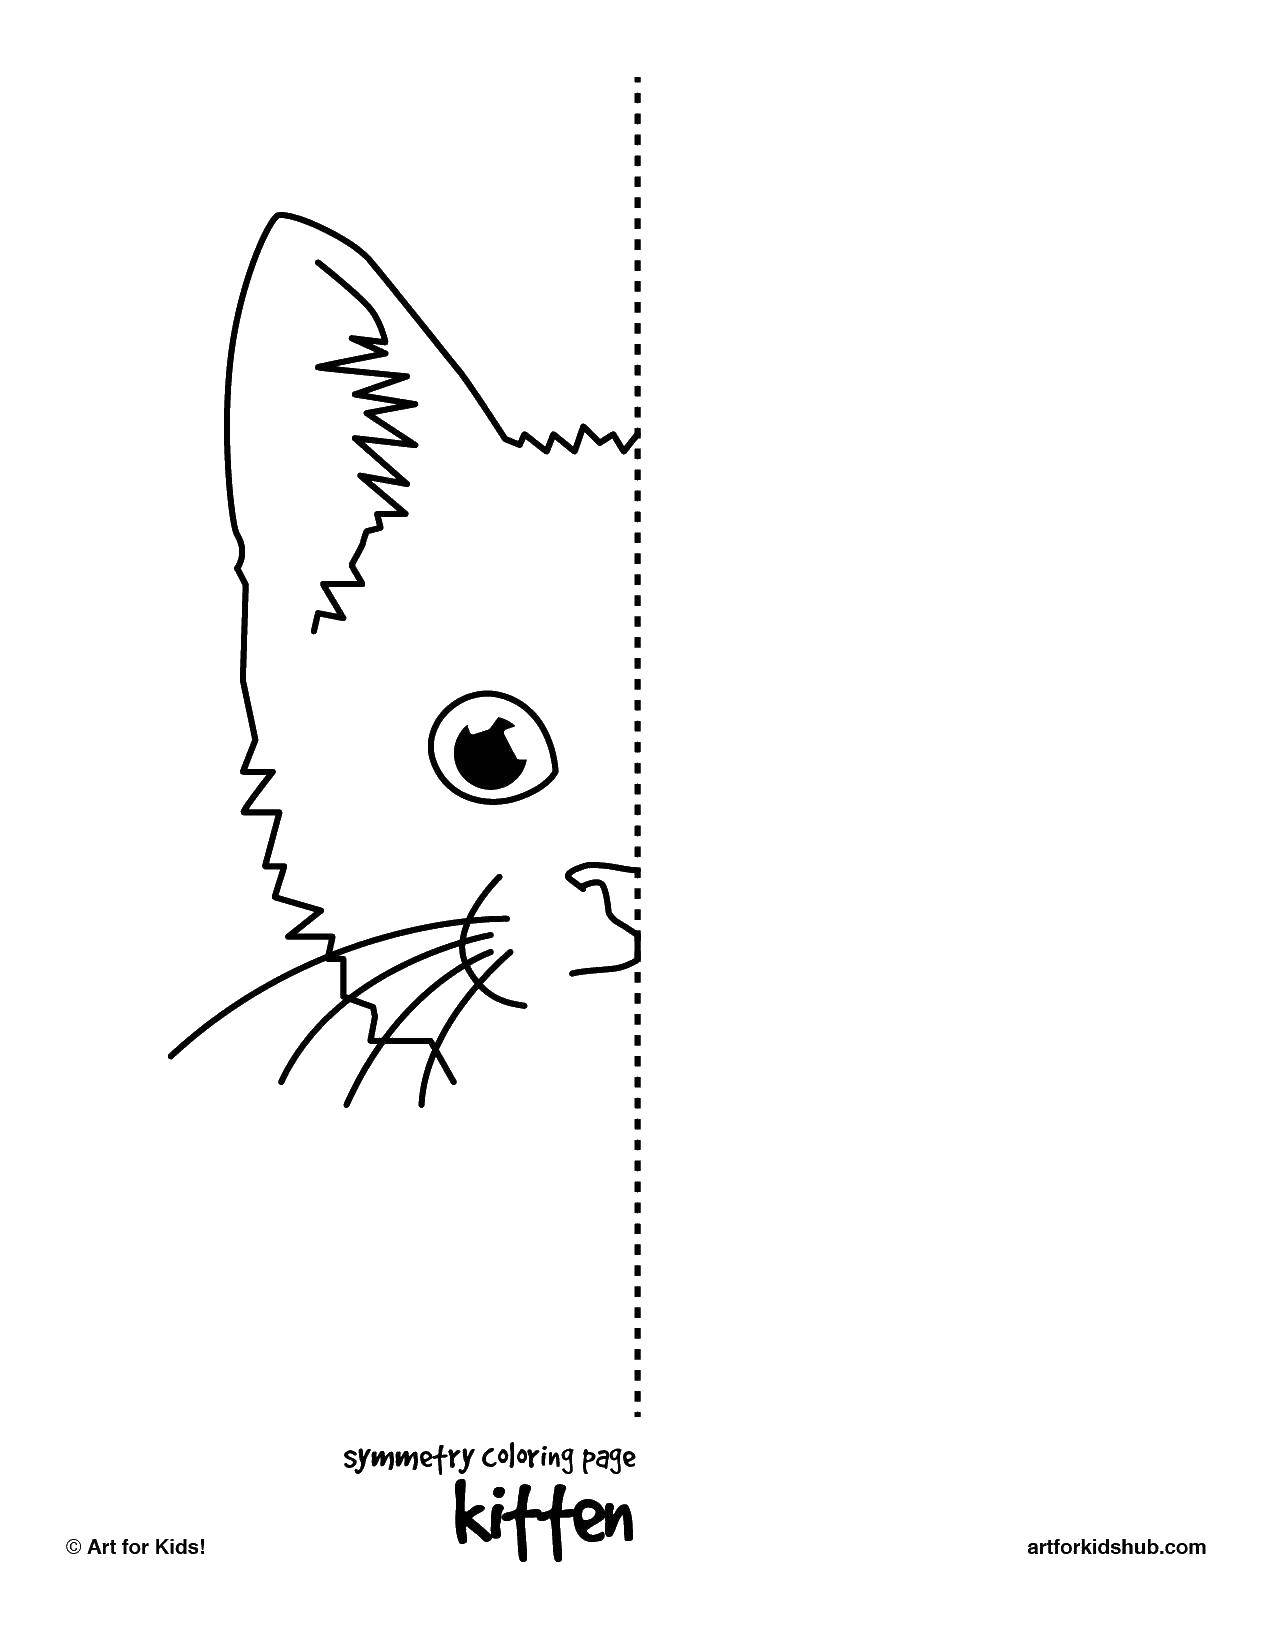 Название: Раскраска Котенок. Категория: Калейдоскоп. Теги: котенок, раскраска.